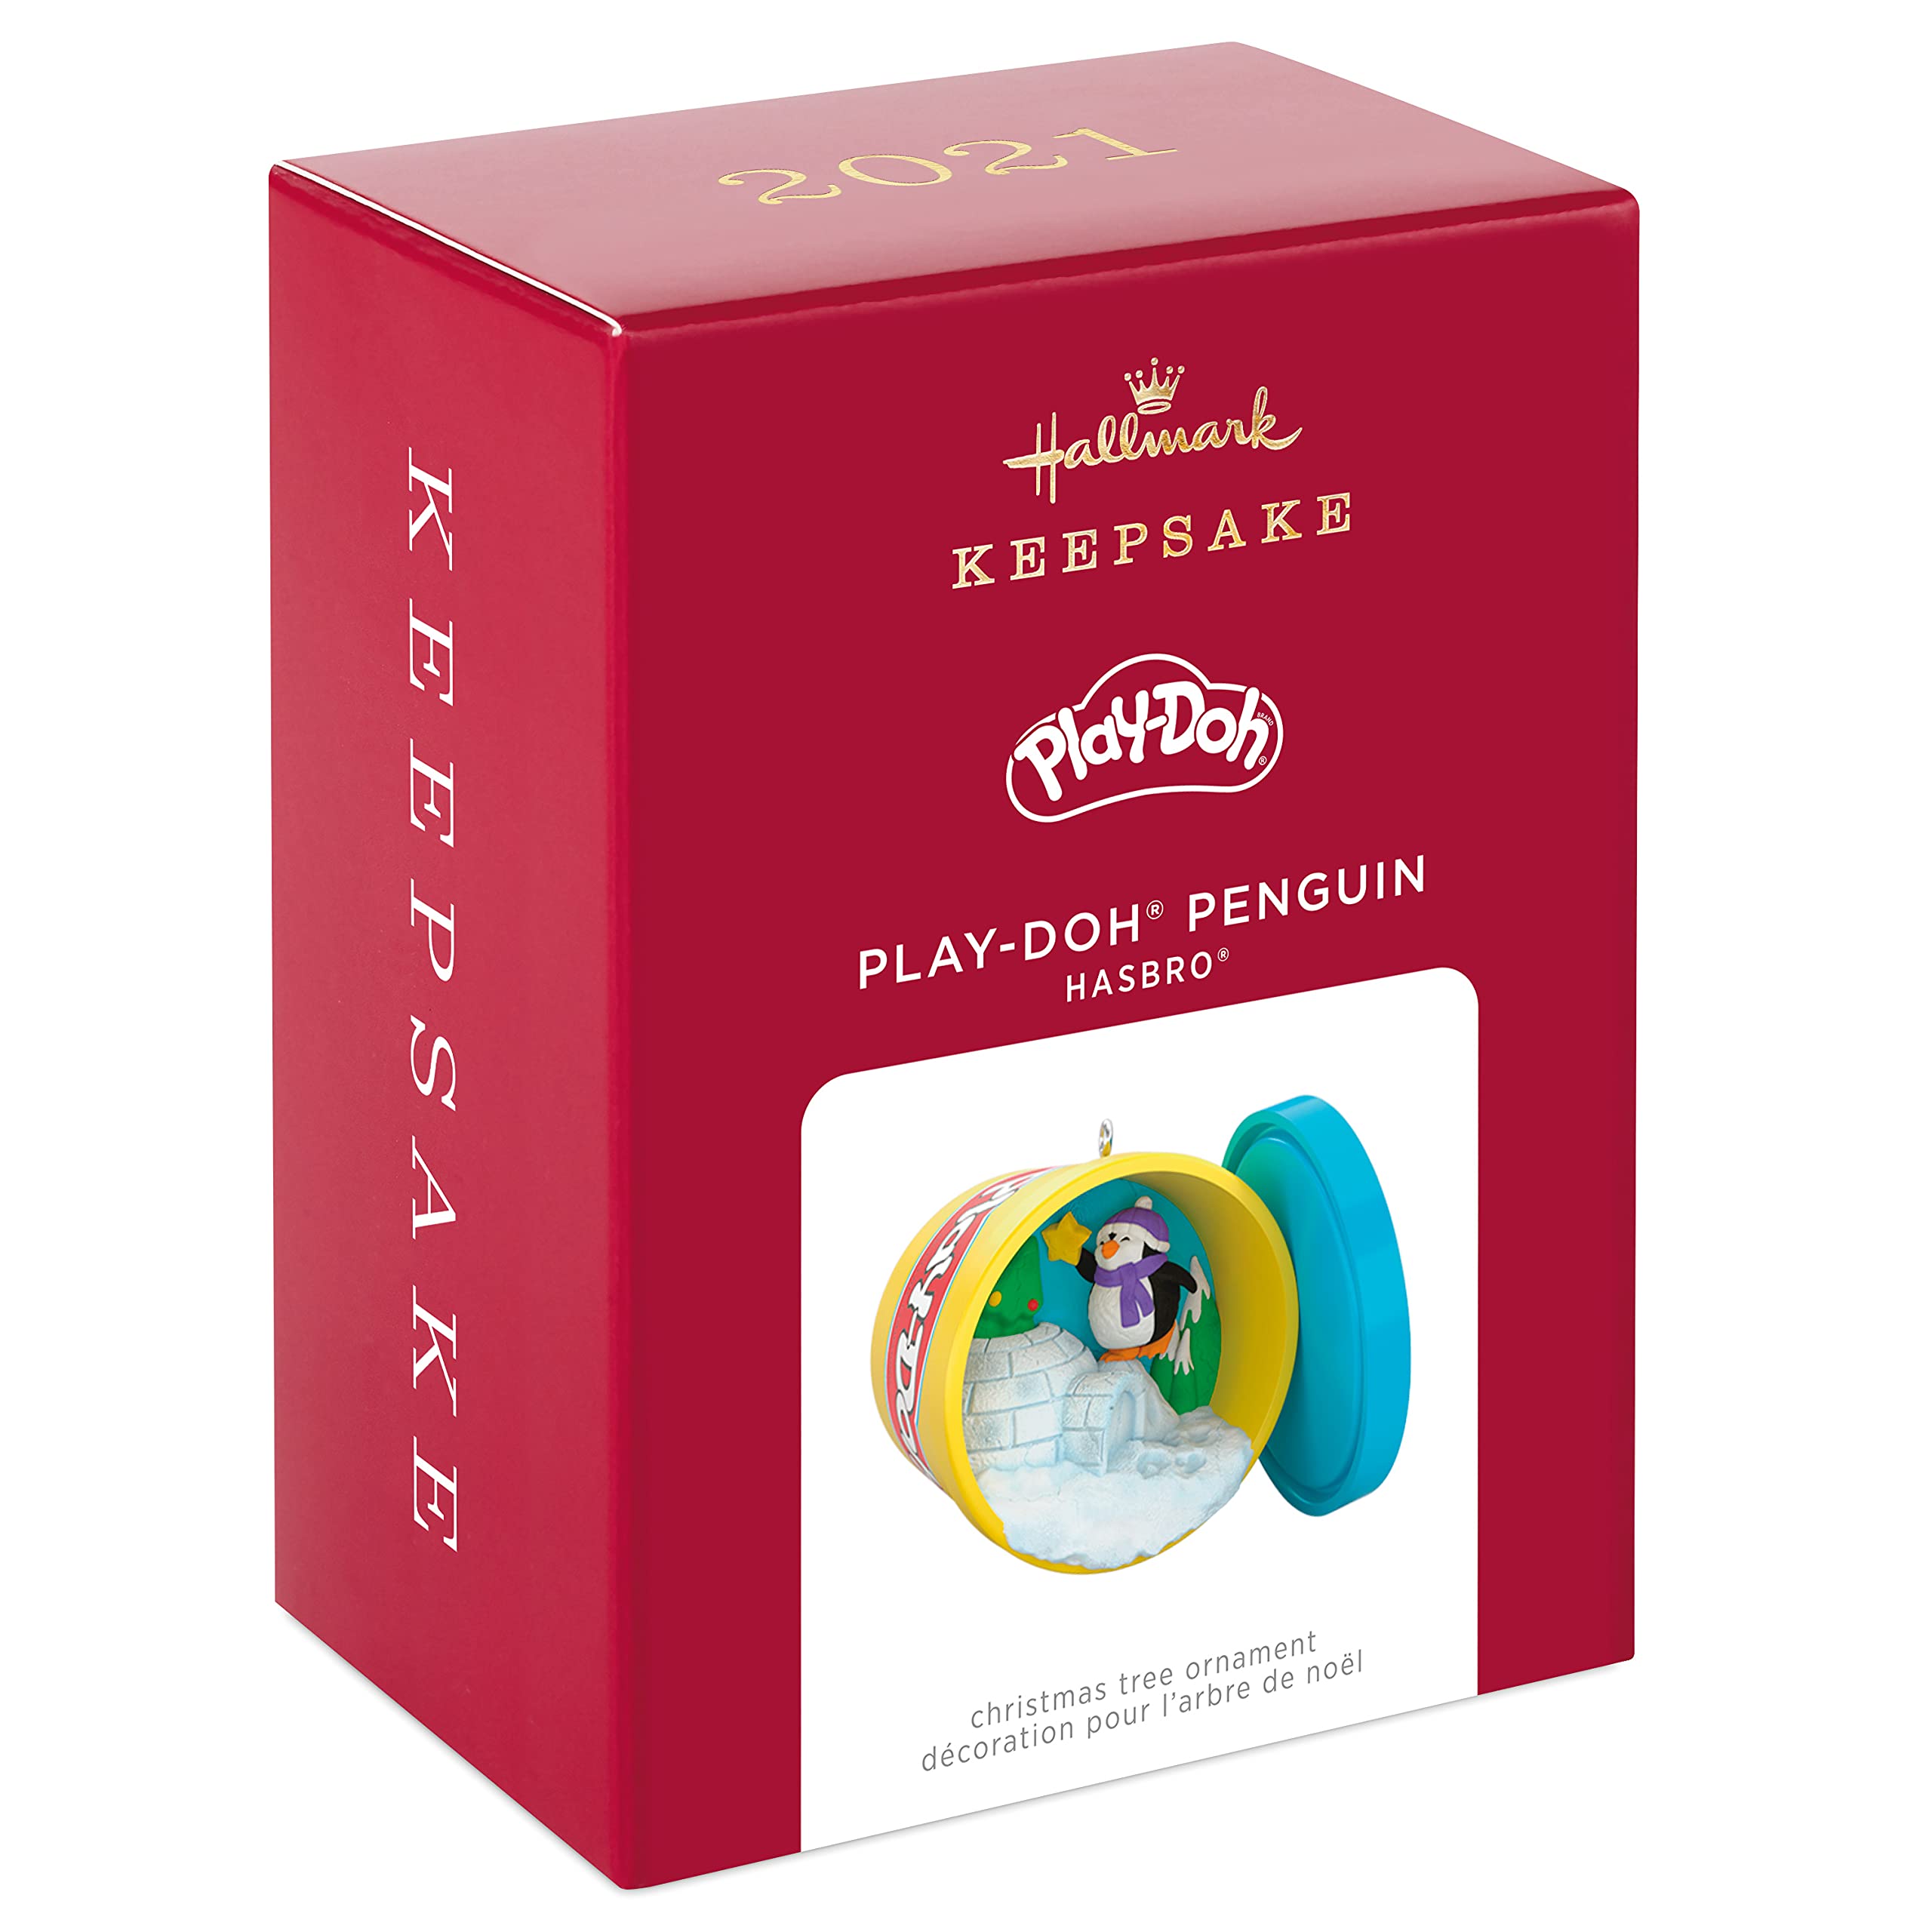 Hasbro Play-doh Penguin Hallmark Keepsake Christmas Ornament 2021